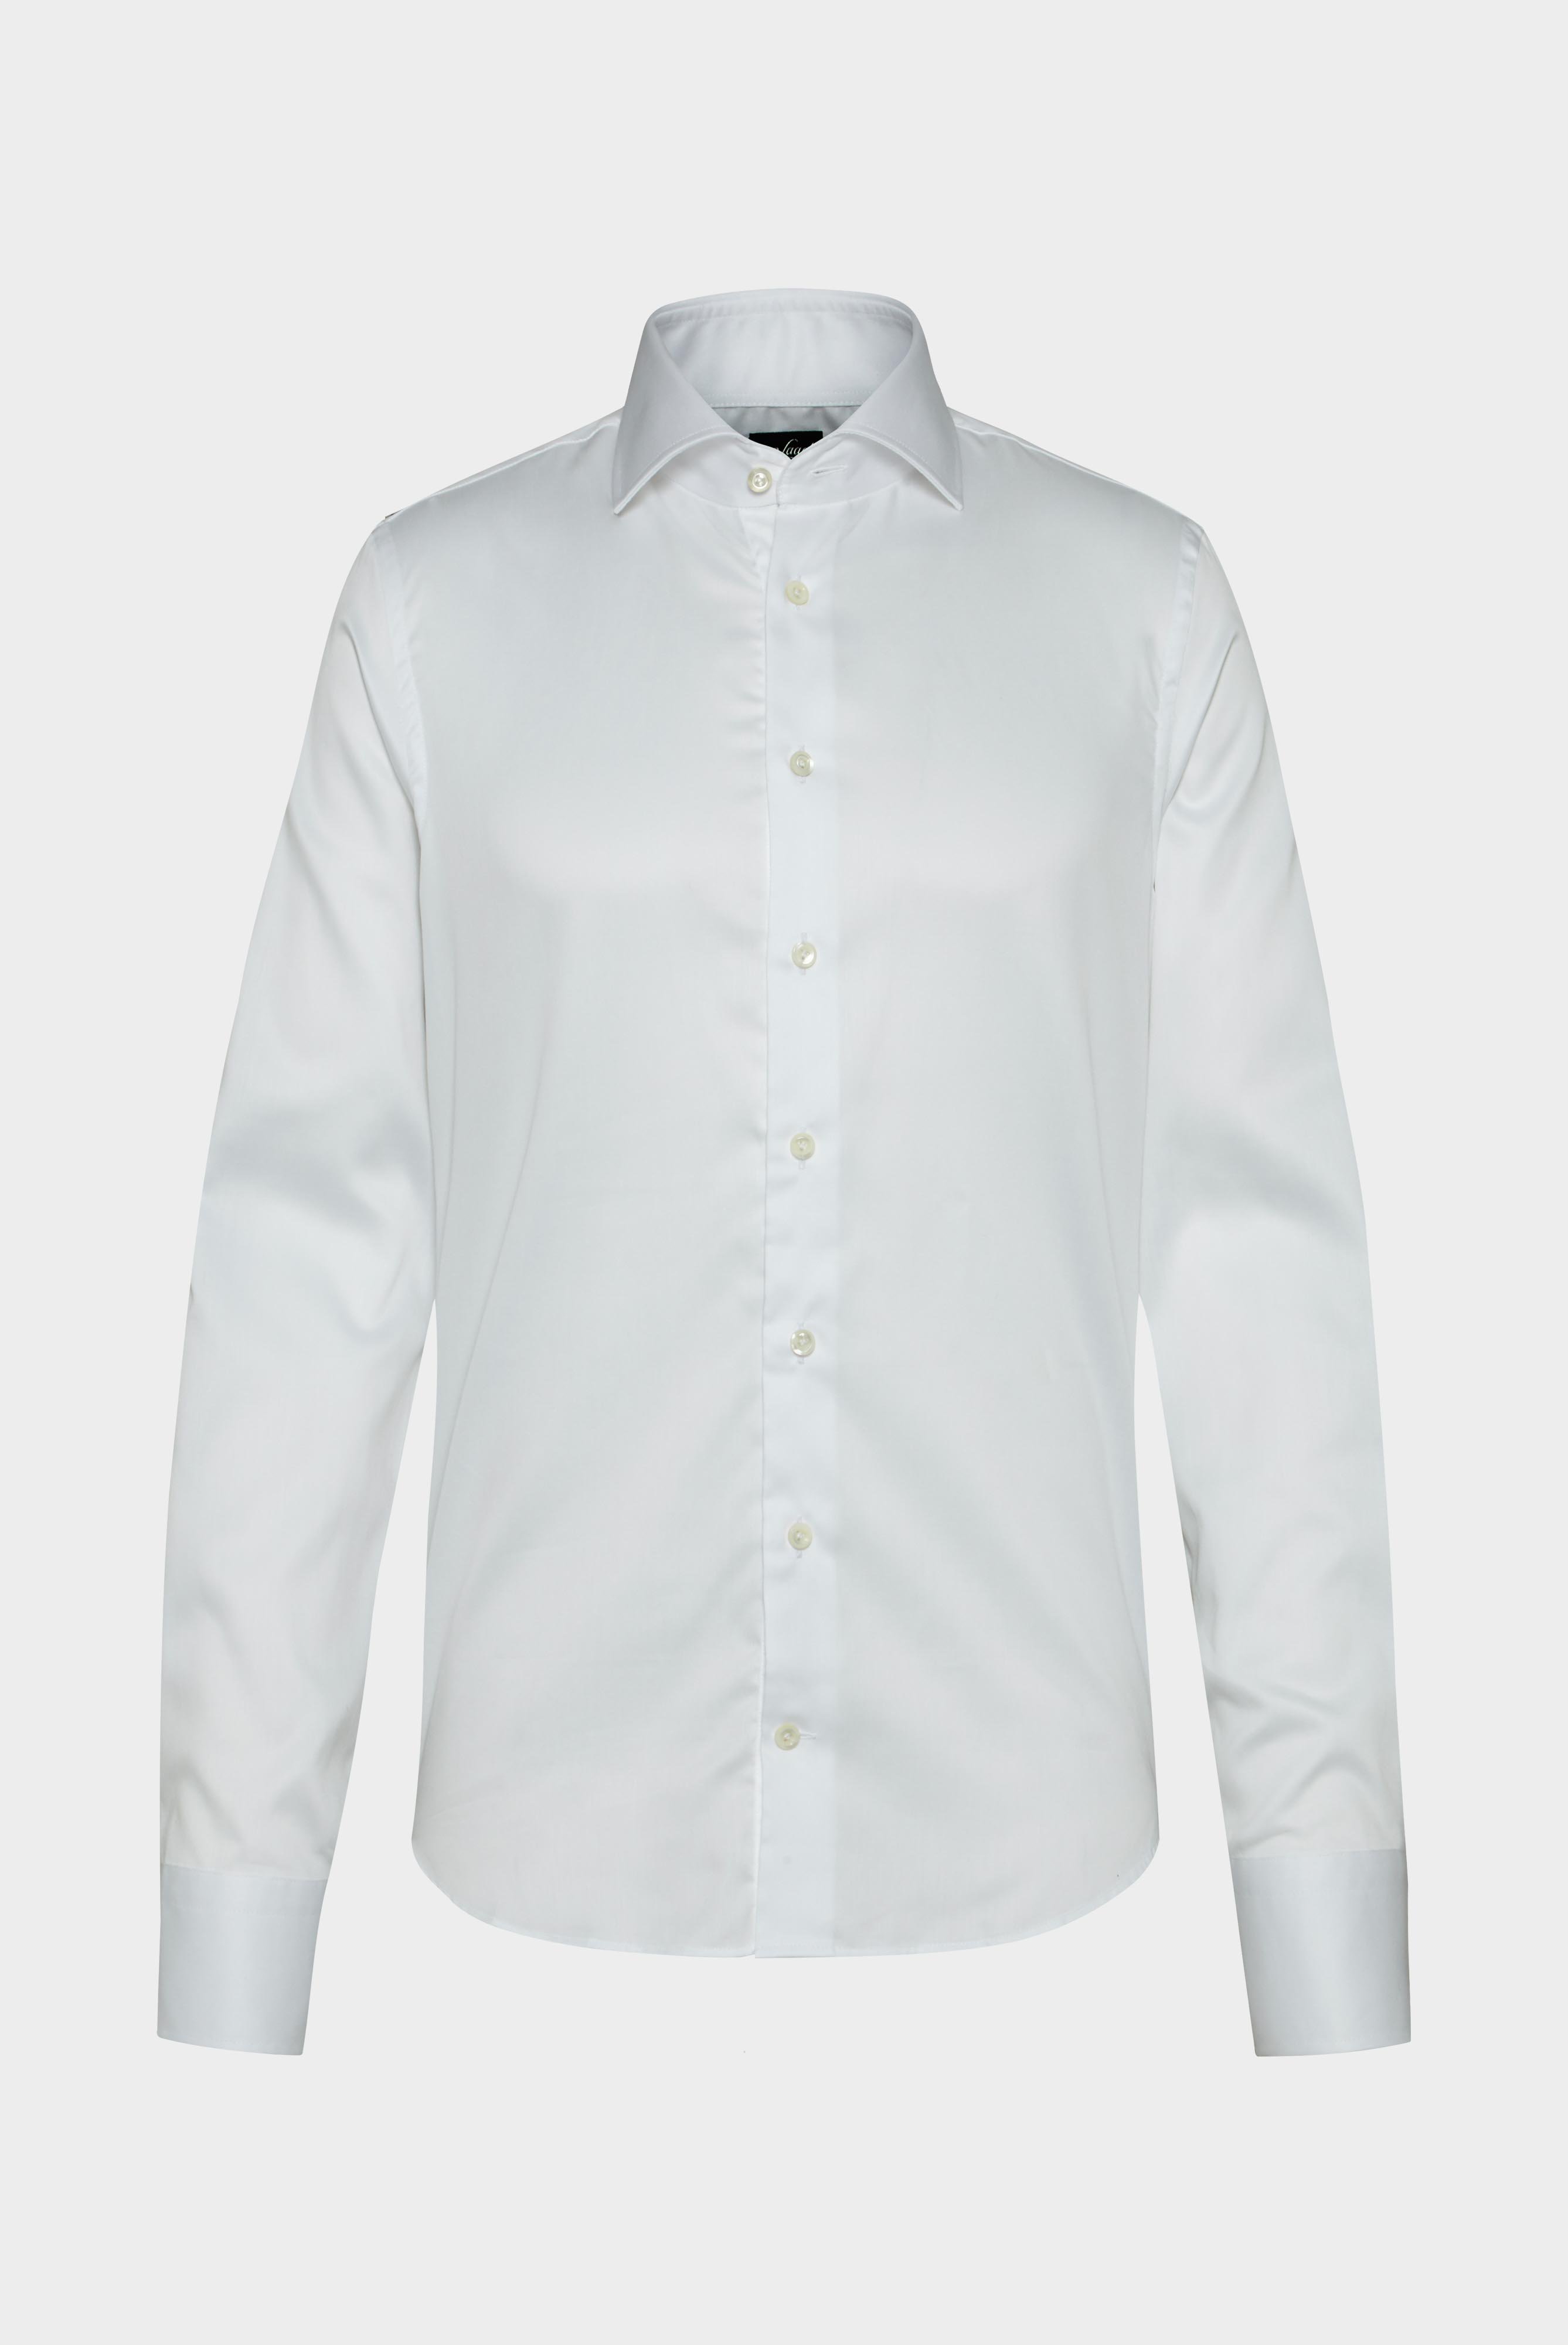 Easy Iron Shirts+Wrinkle-Free Fine-Twill Shirt+20.2019.BQ.132241.000.39